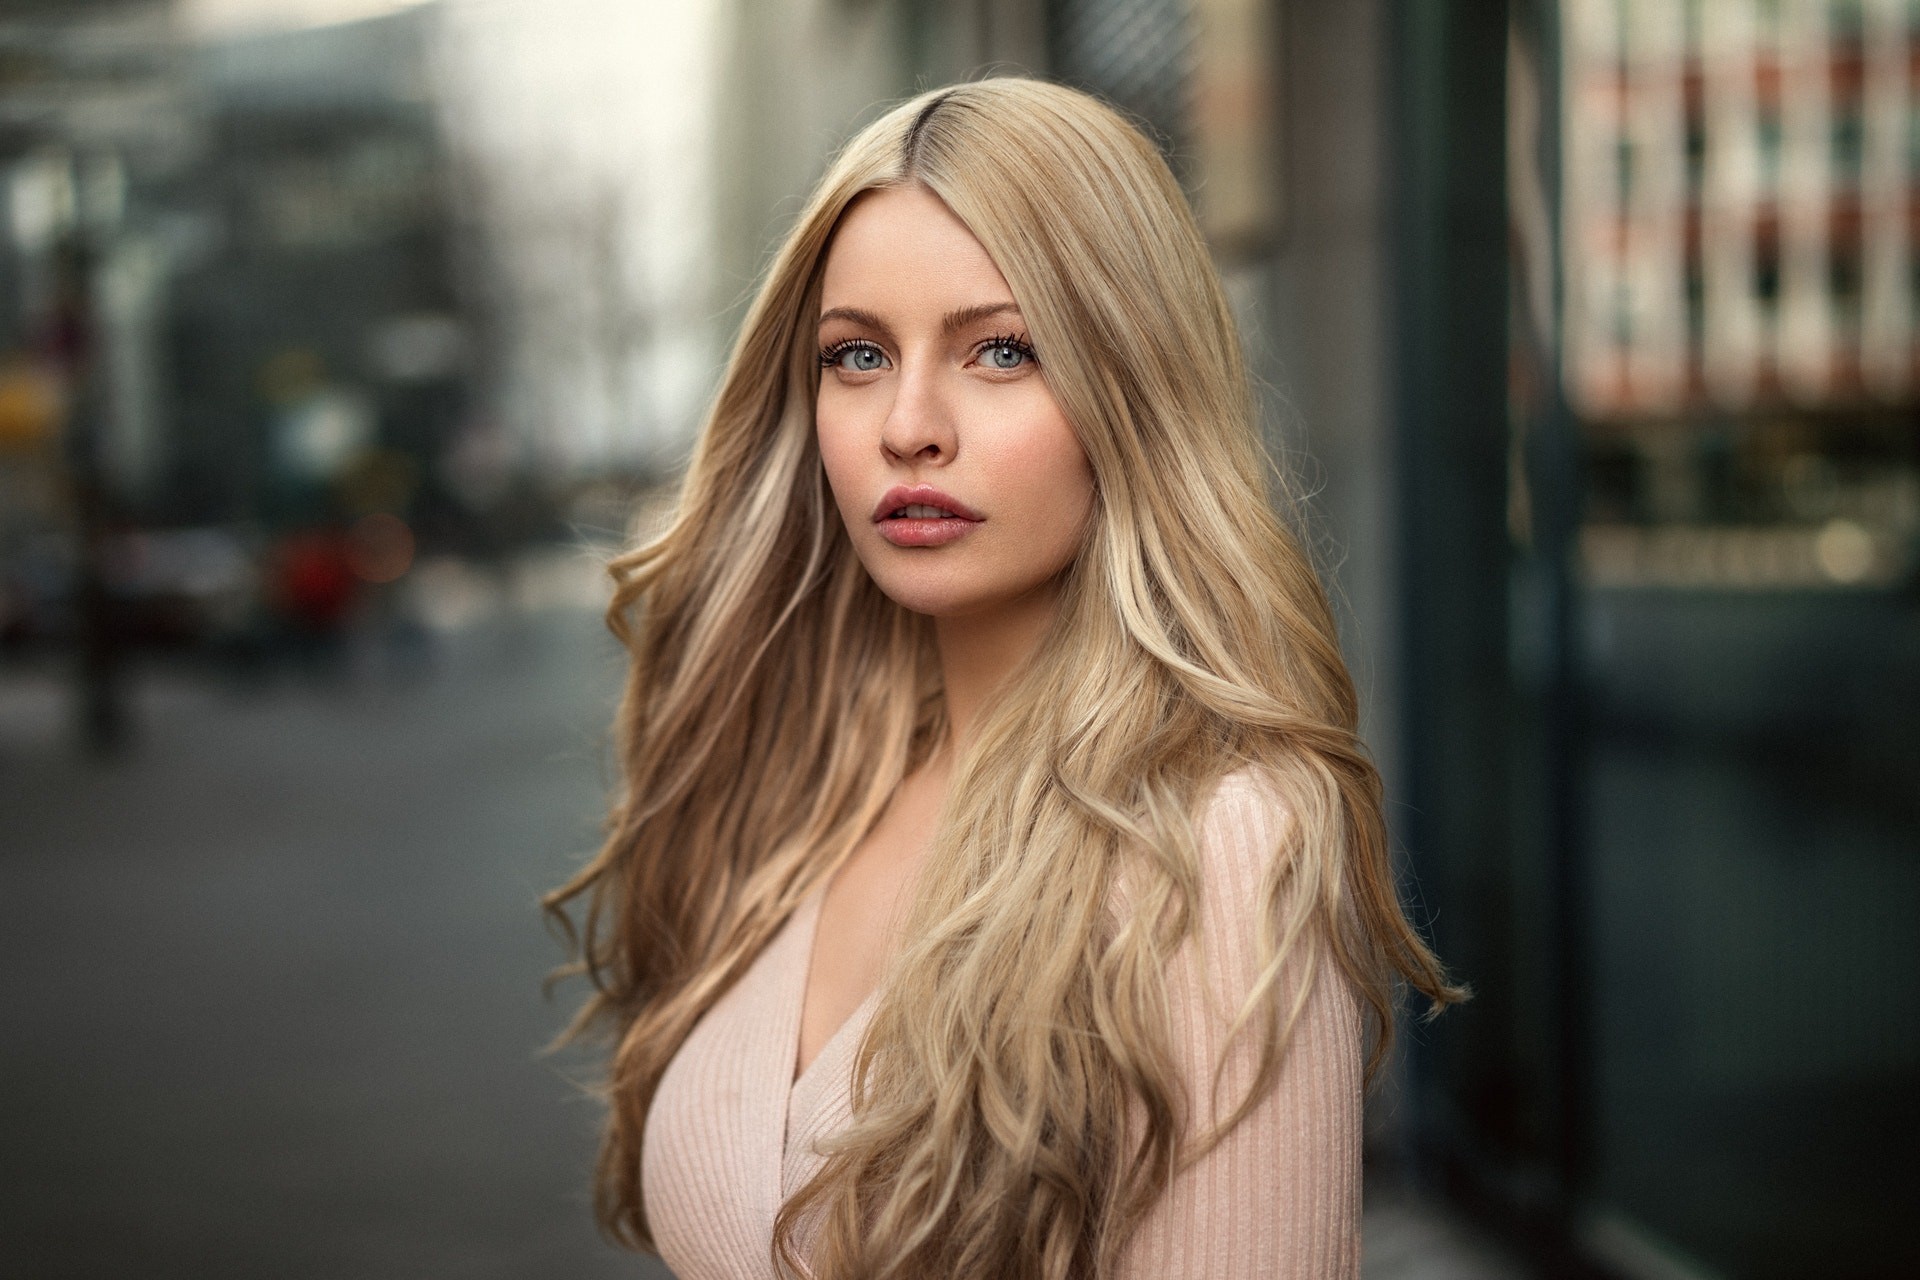 Handy-Wallpaper Haar, Blond, Modell, Frauen, Blaue Augen, Tiefenschärfe kostenlos herunterladen.